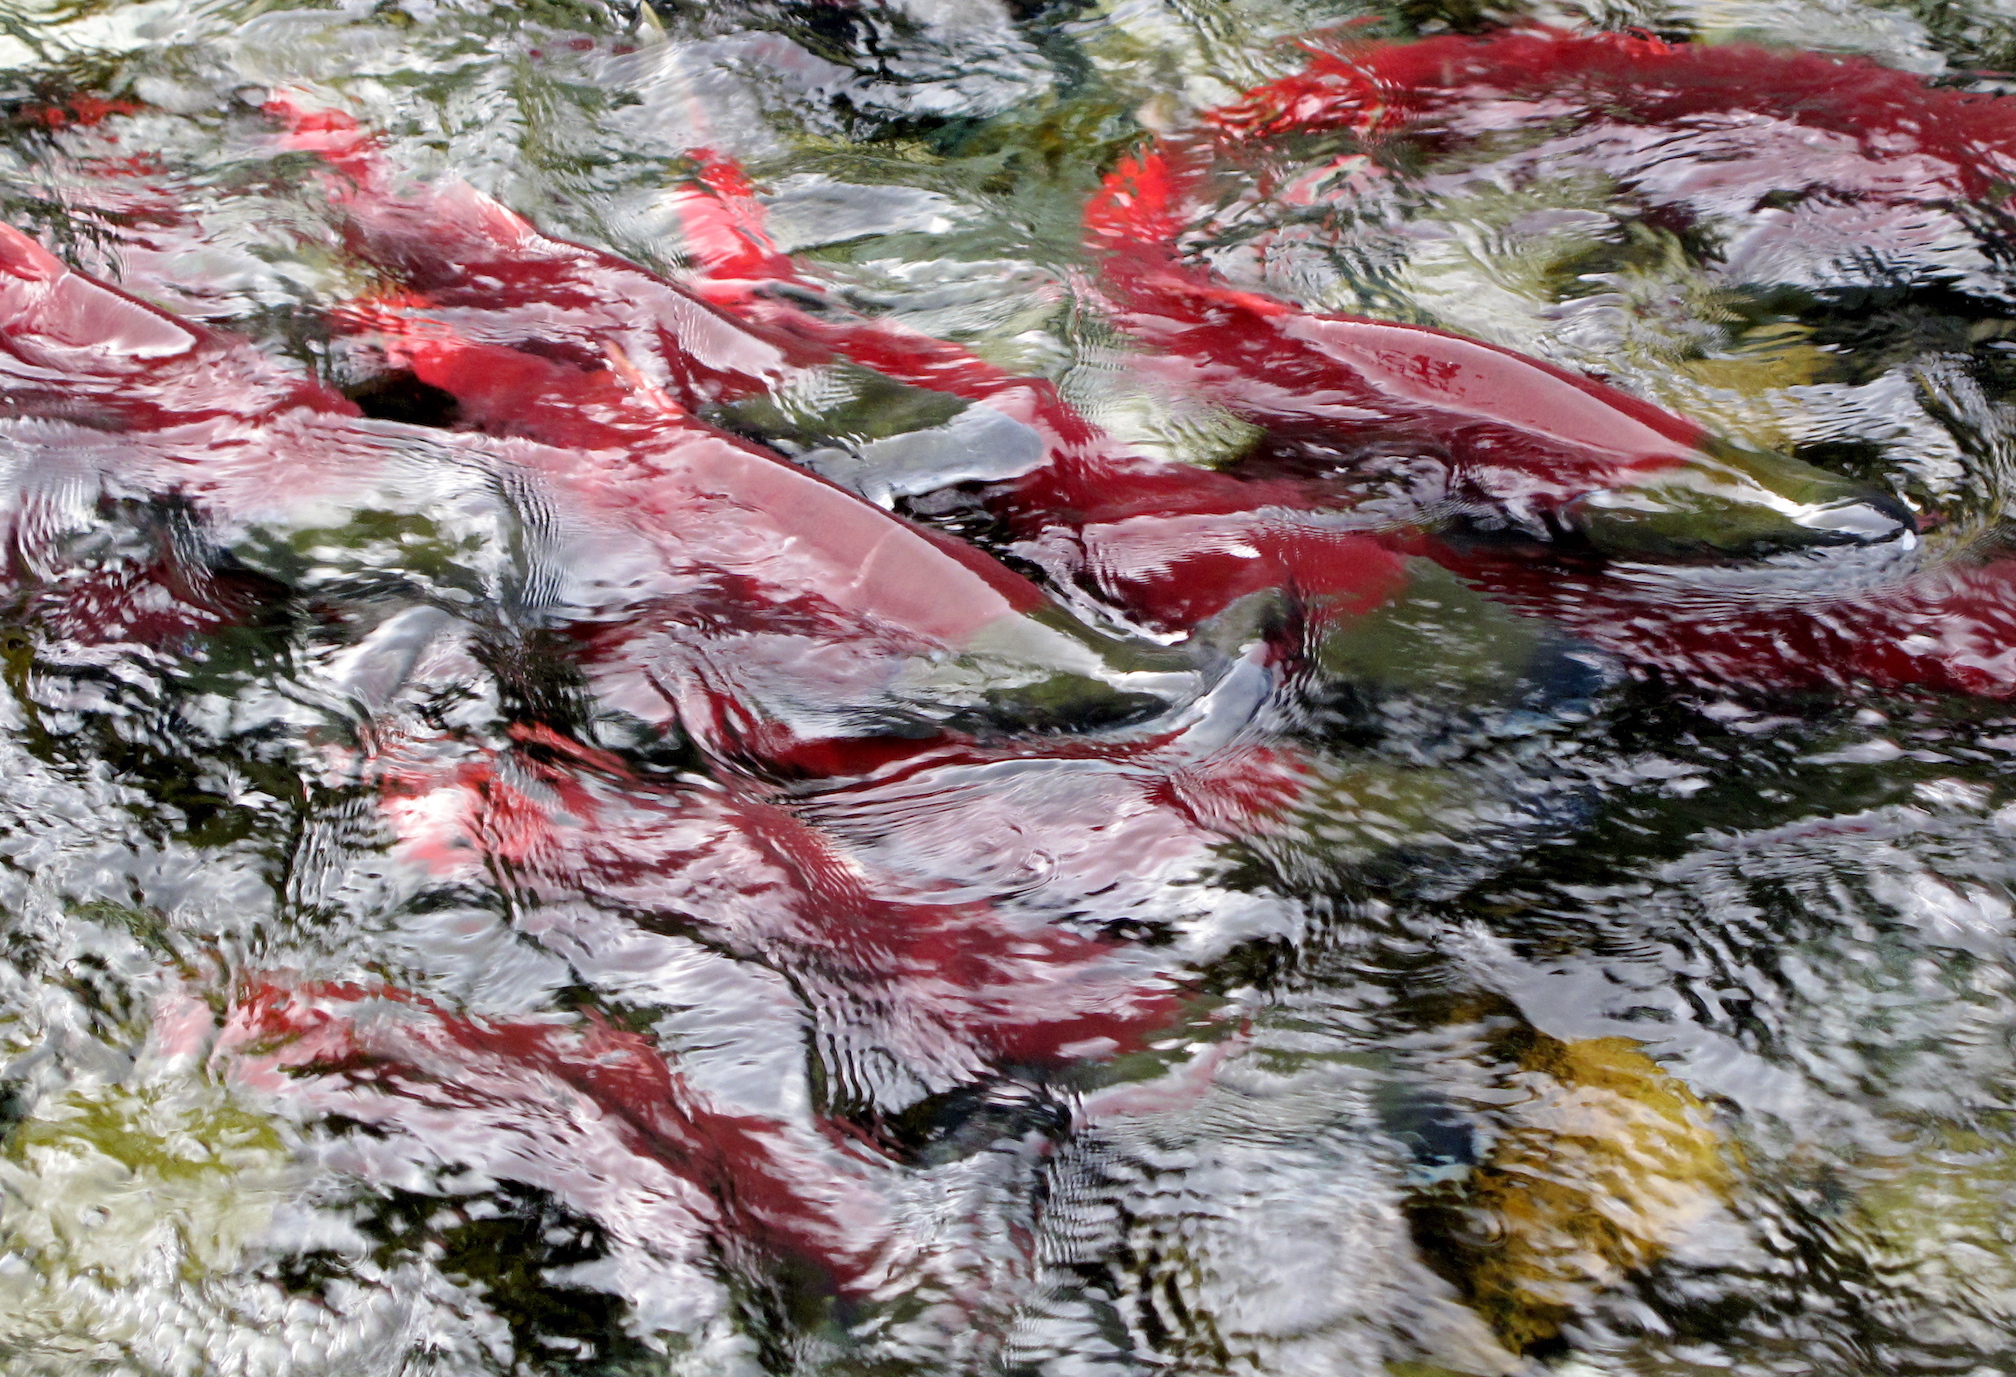 Red salmon gather at a Gulkana Hatchery fish weir 